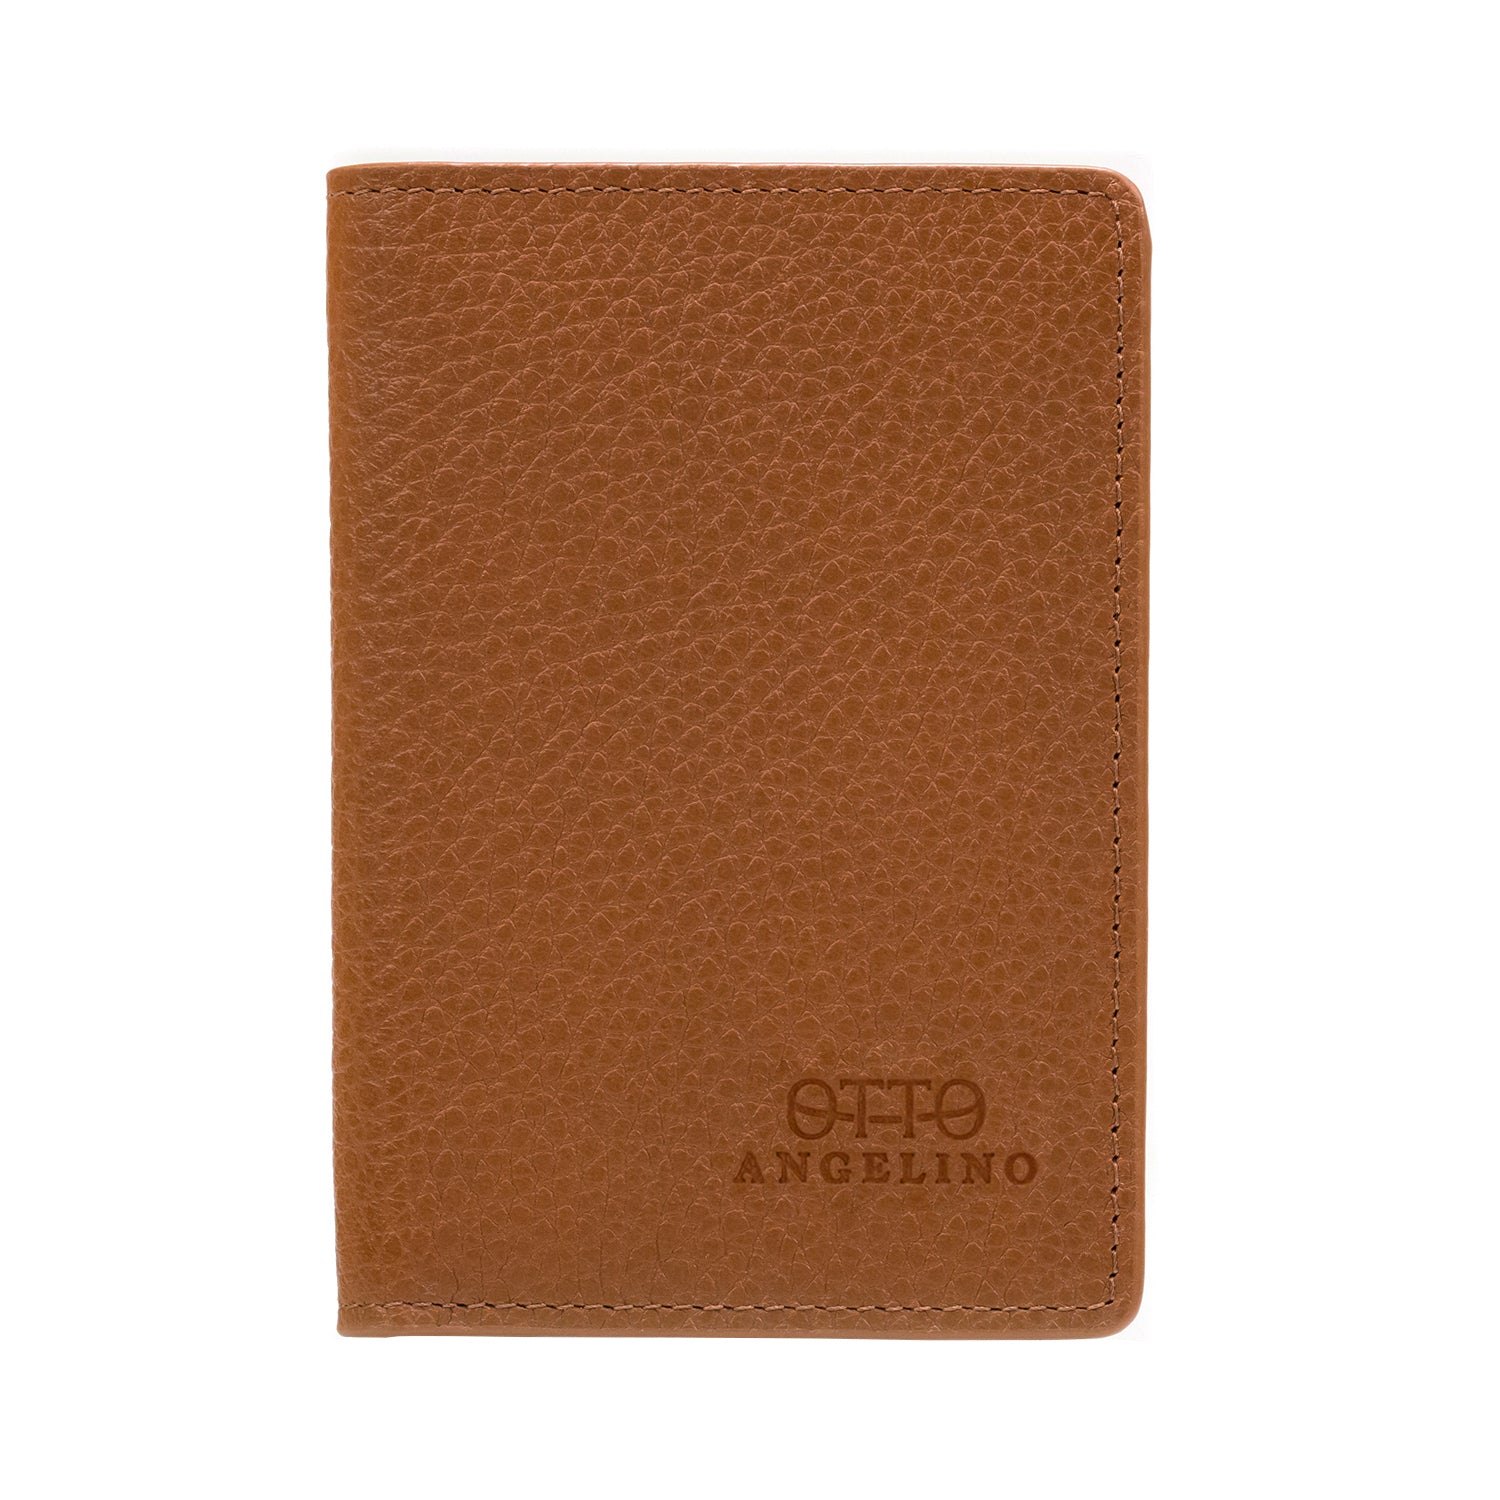 Otto Angelino Angelino Real Leather Passport Wallet, RFID Blocking